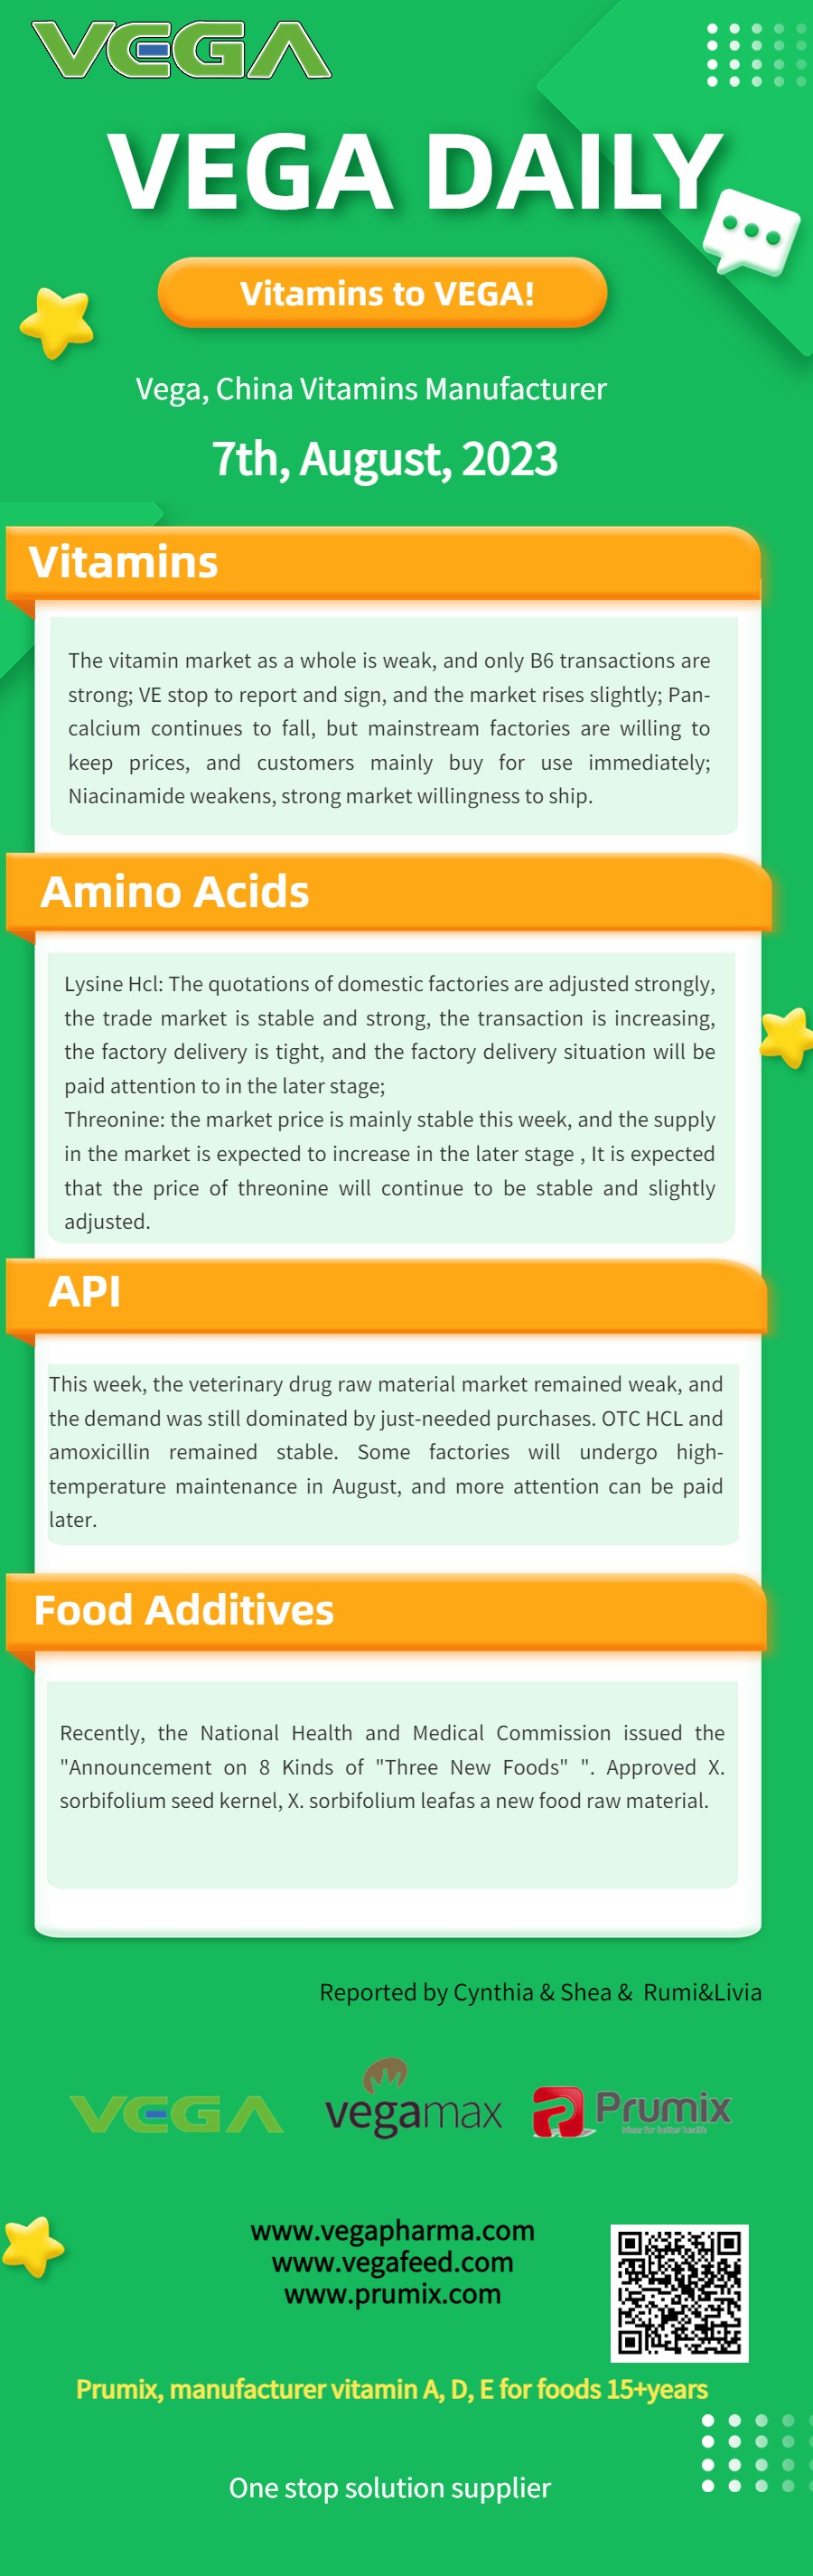 Vega Daily Dated on August  7th 2023 Vitamin Amino Acid API Food additives.jpg